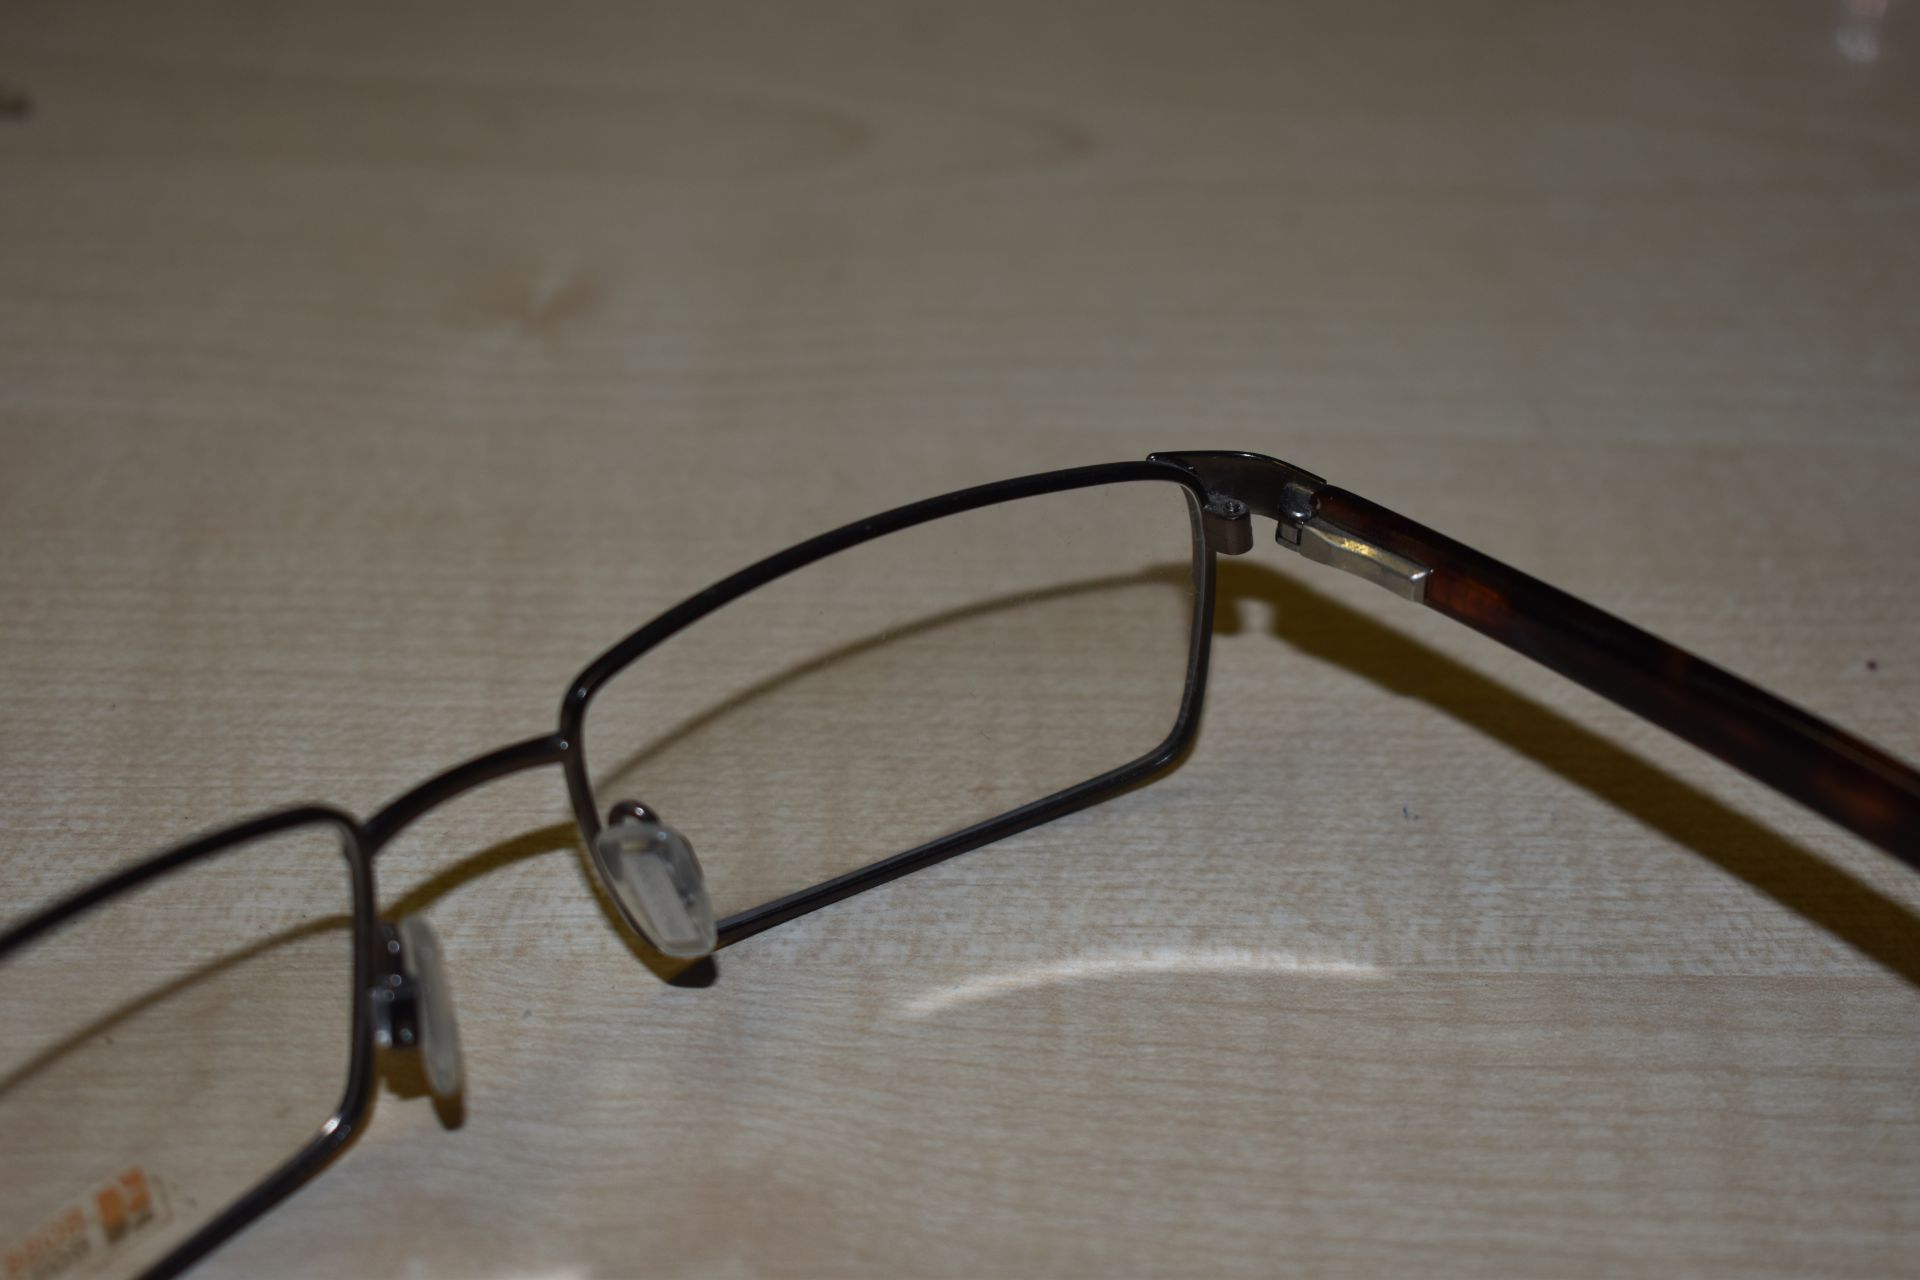 1 x Genuine BOSS ORANGE Spectacle Eye Glasses Frame - Ex Display Stock  - Ref: GTI193 - CL645 - - Image 7 of 11